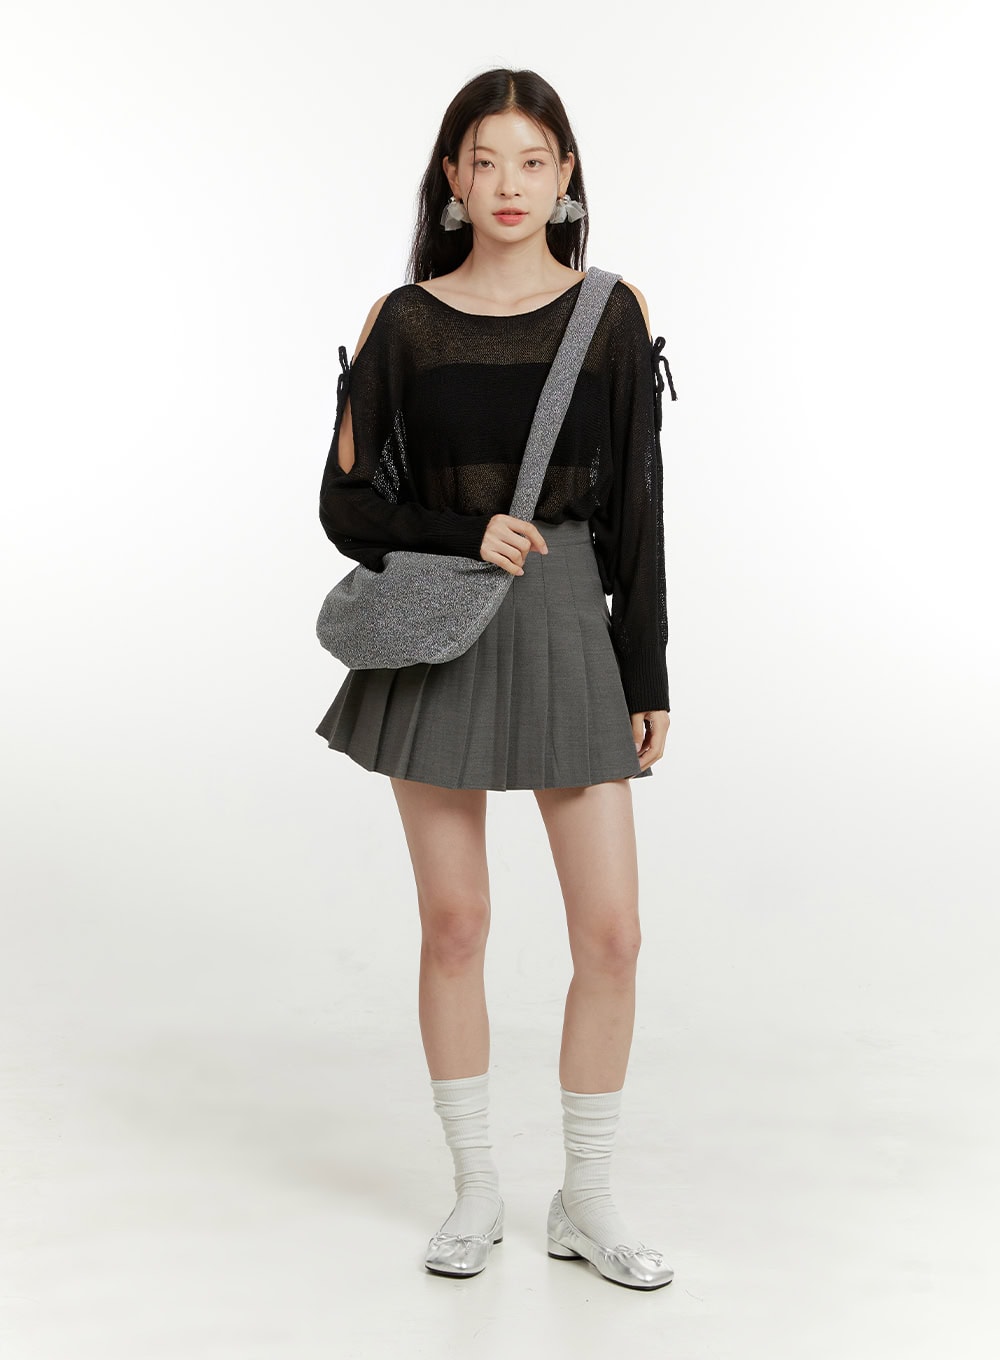 pleated-chic-mini-skirt-ou419